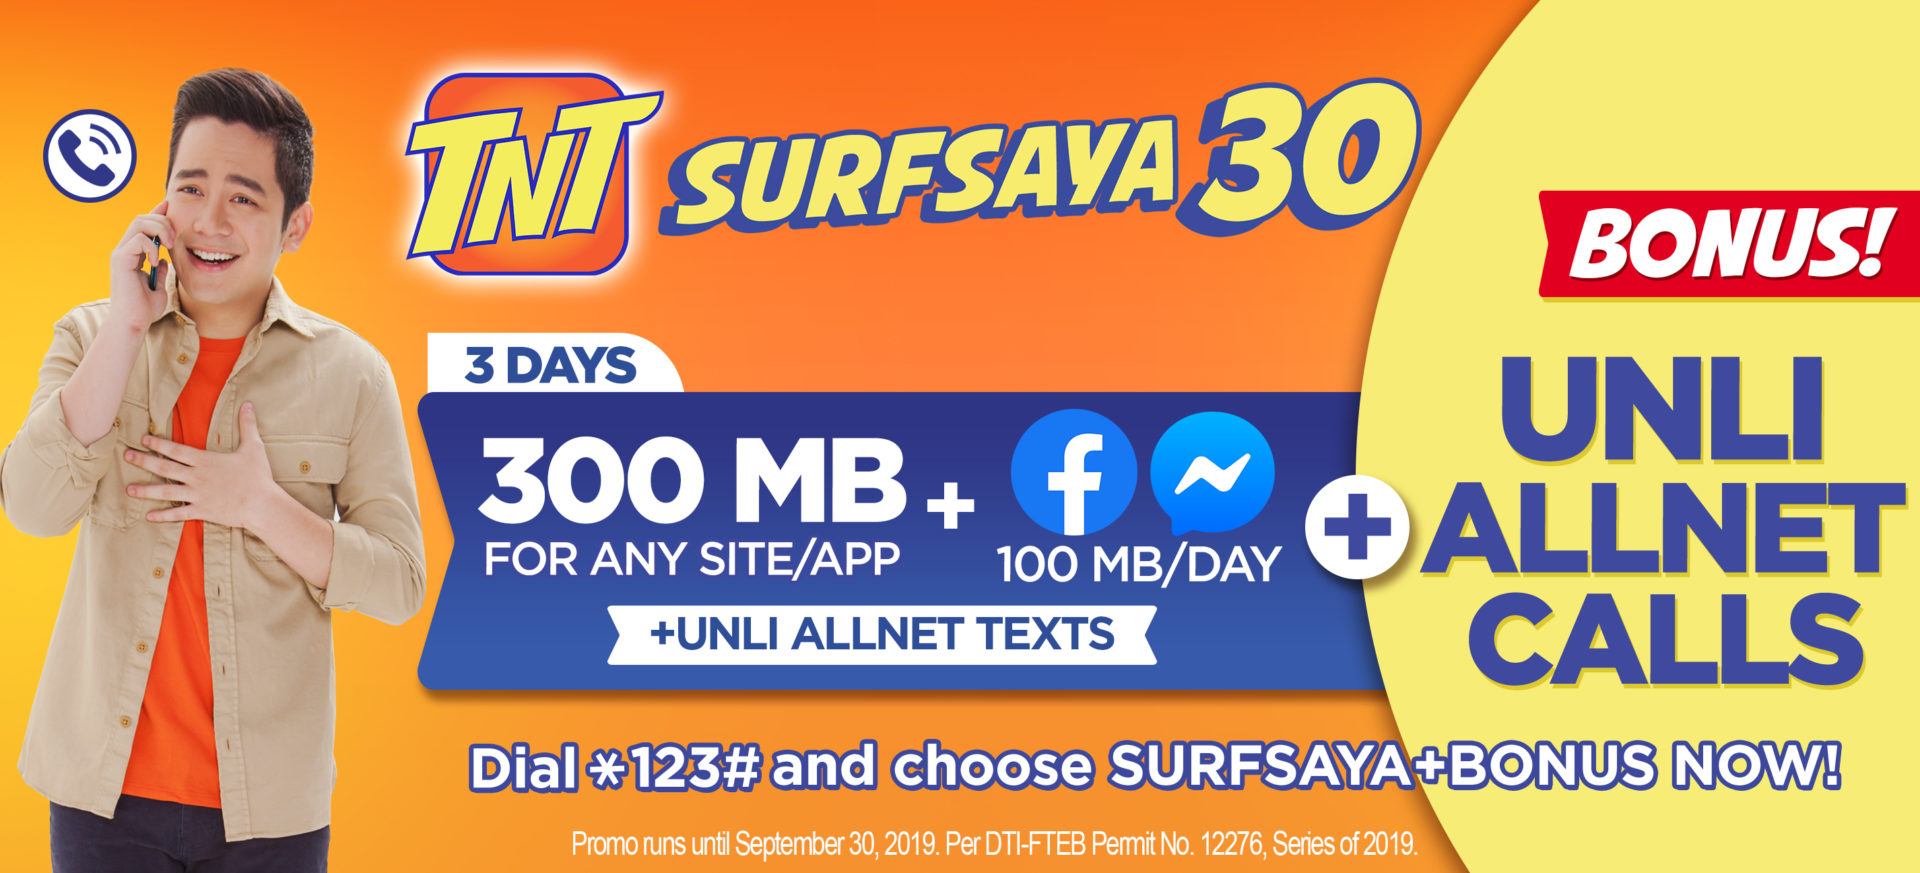 TNT SurfSaya30 Unlicalls